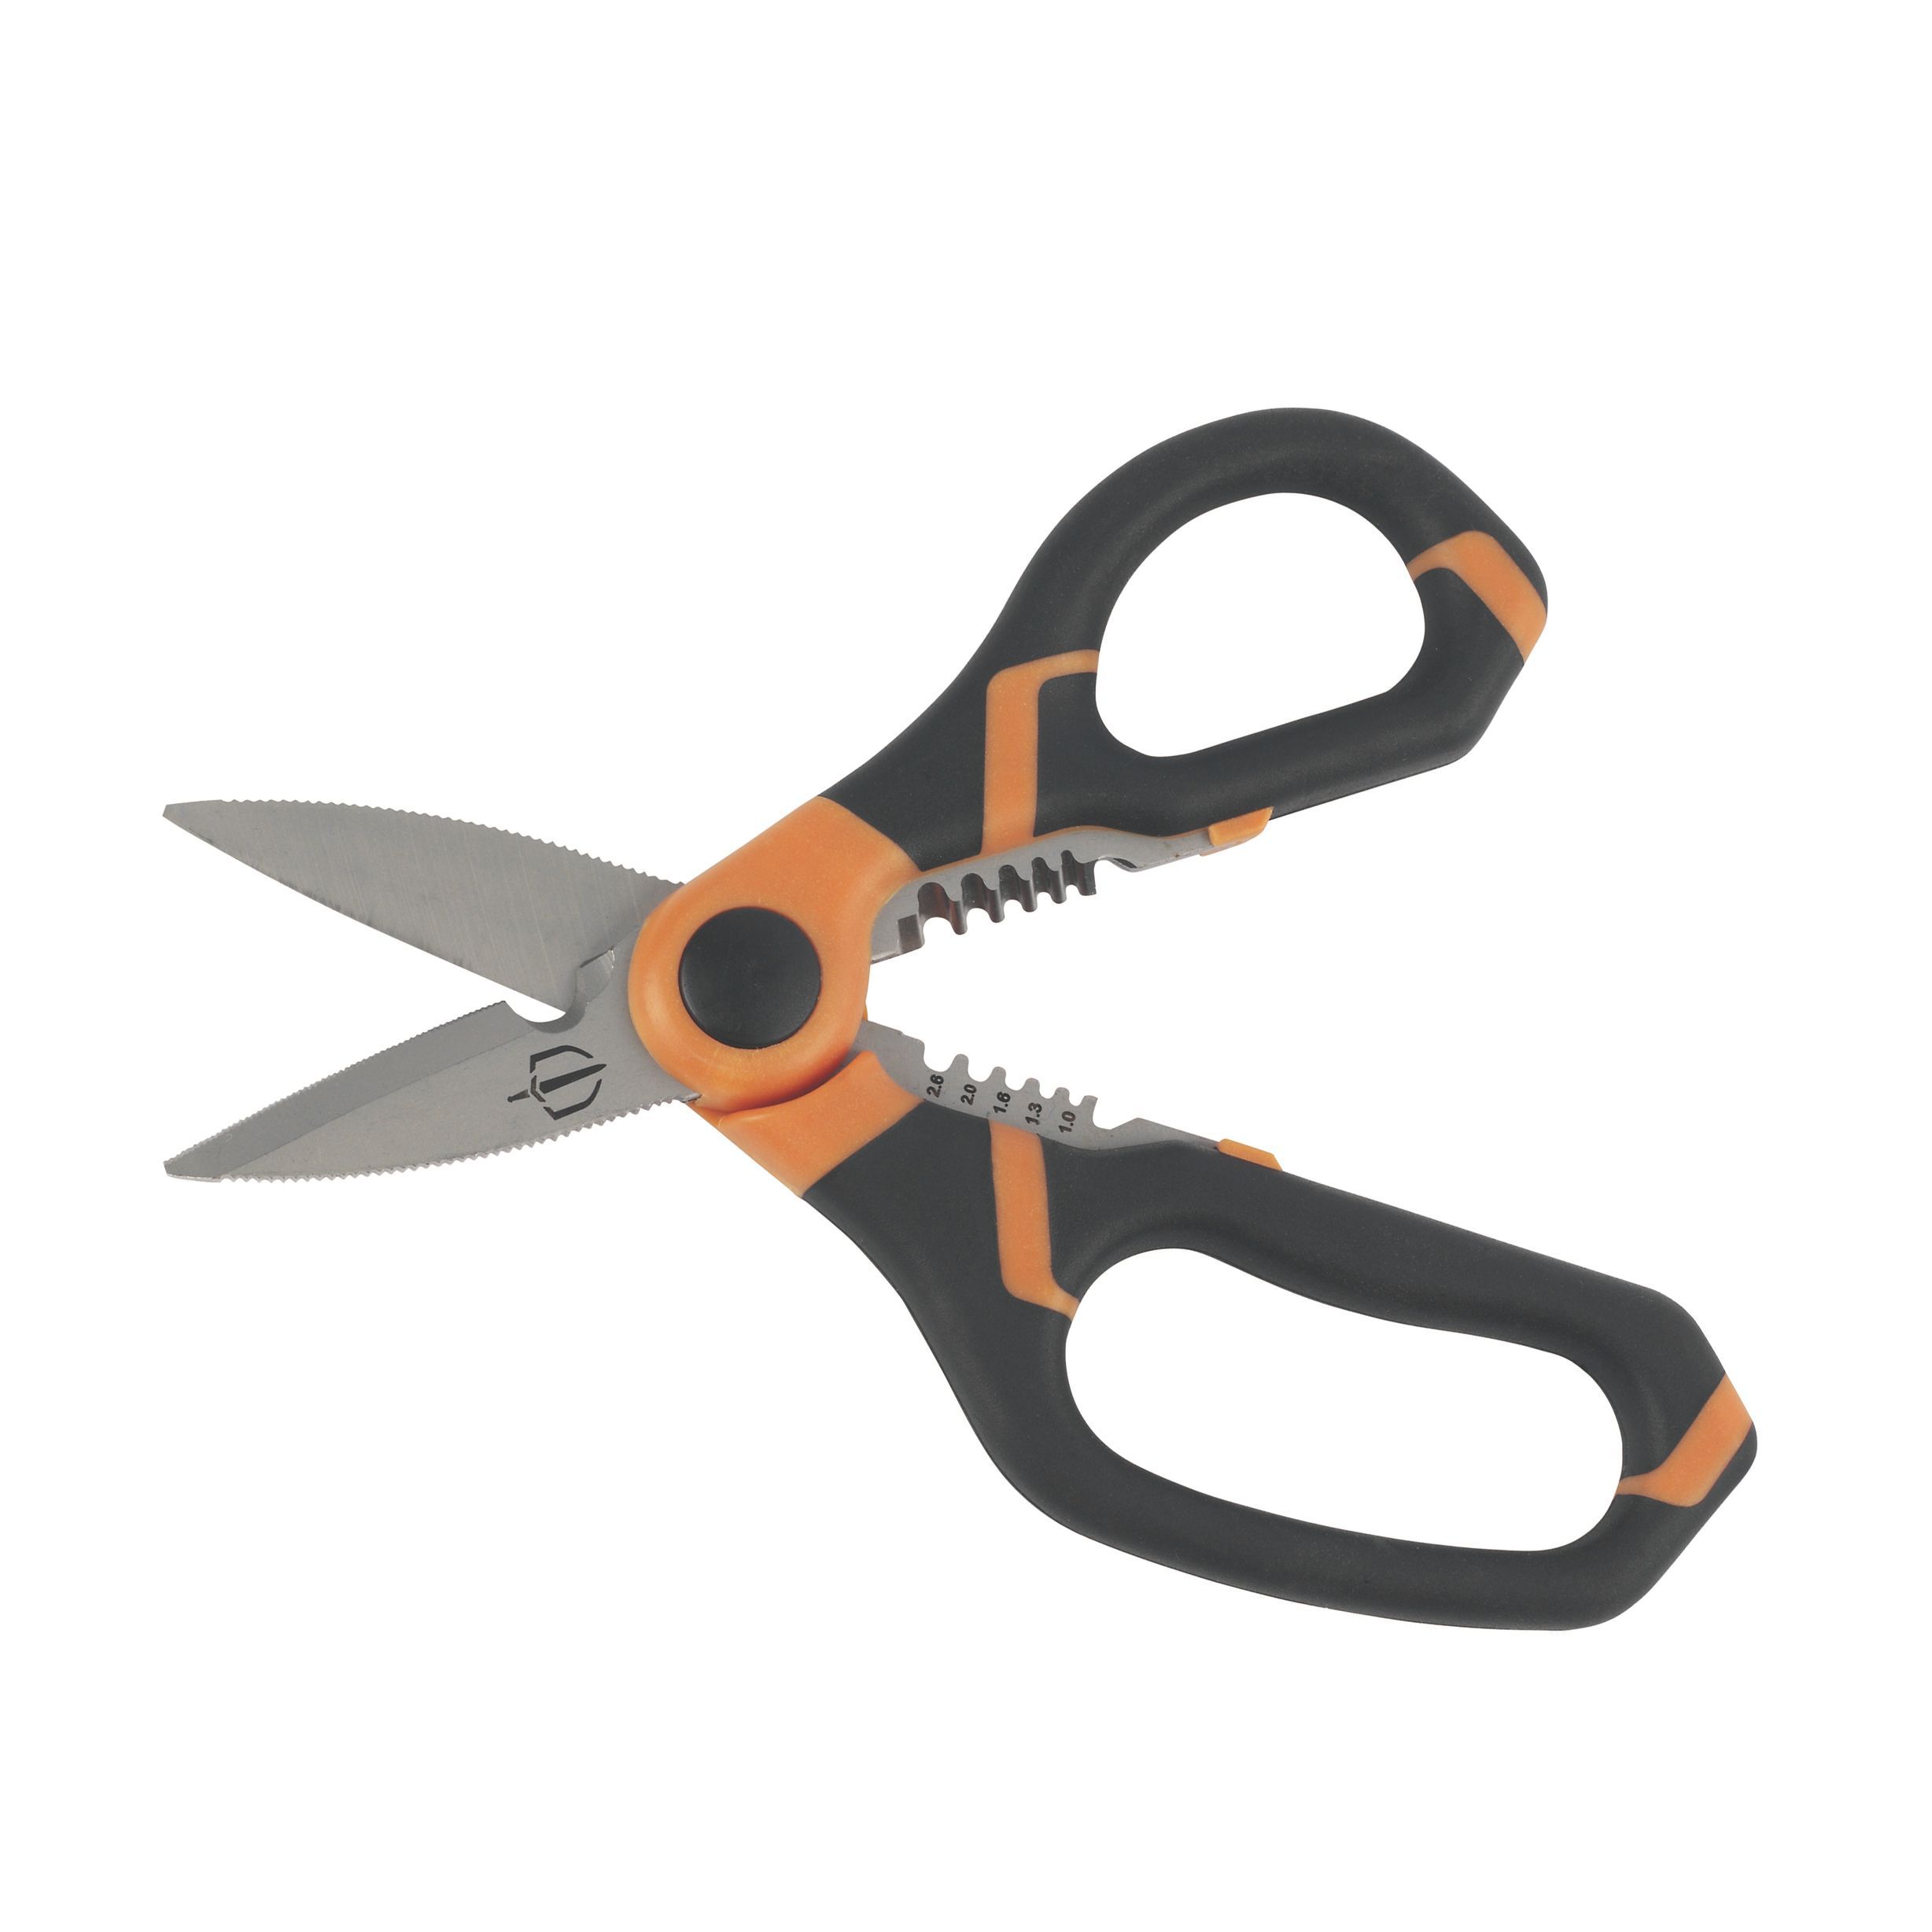 Scissors for life - electrician scissors for the win : r/BuyItForLife